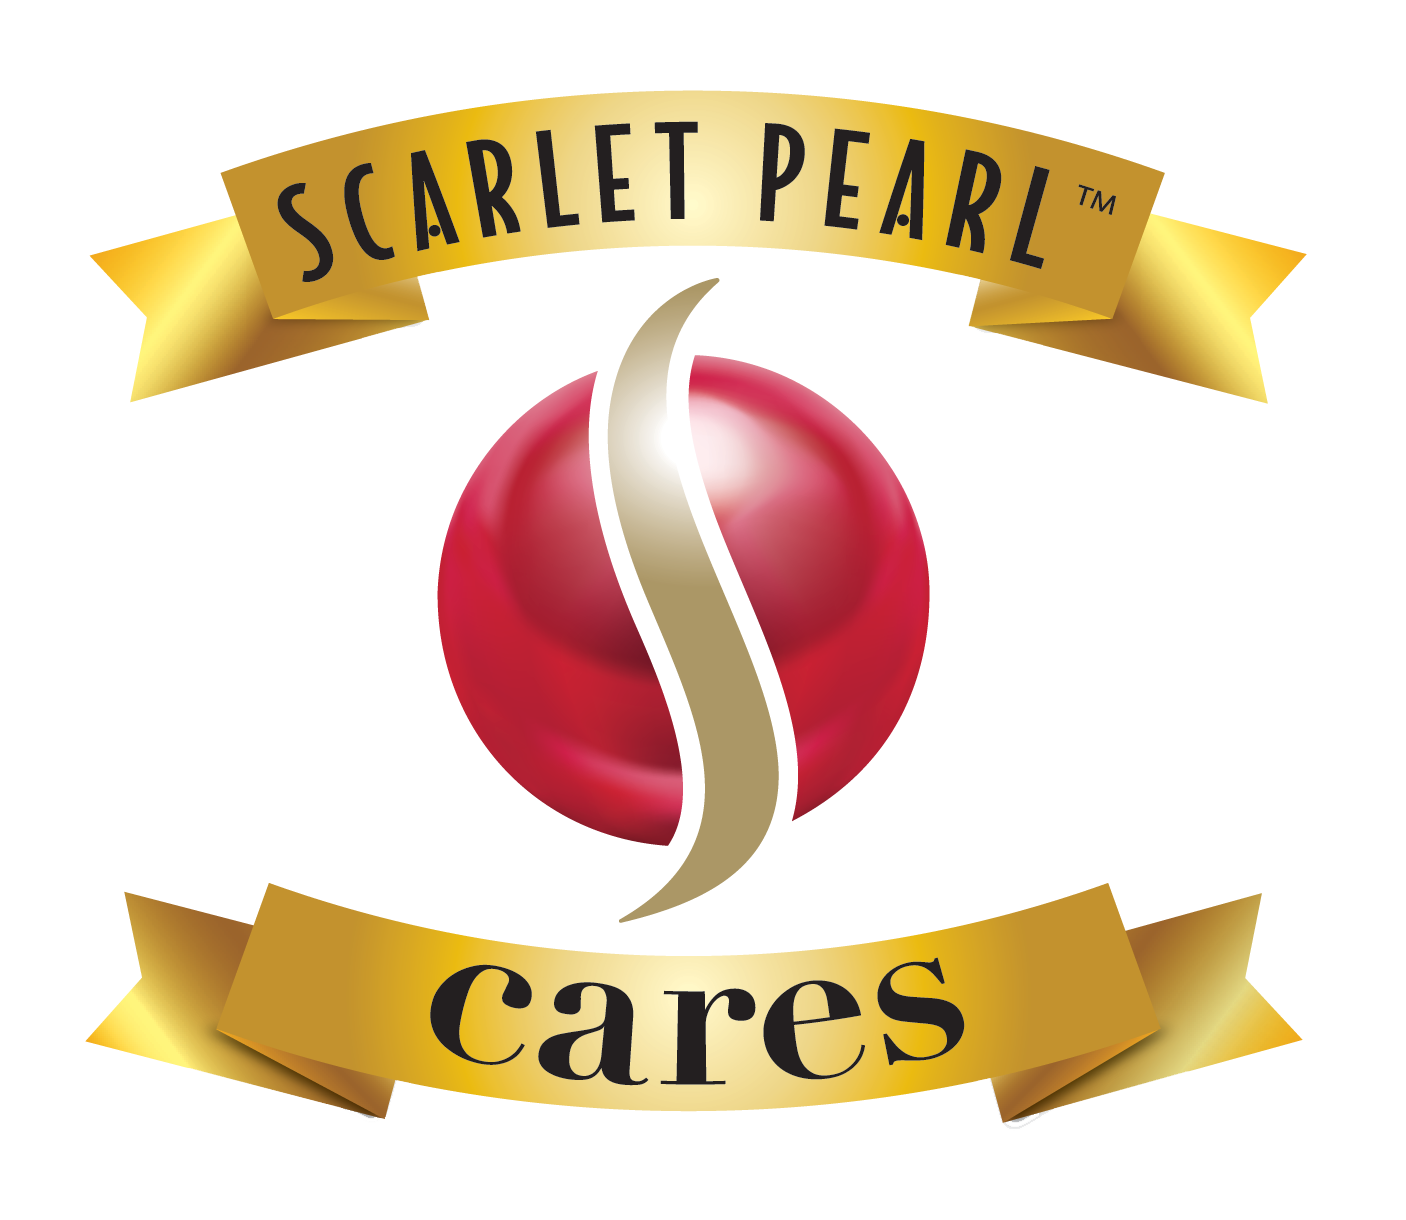 D. Scarlet Pearl Casino (Soporte)